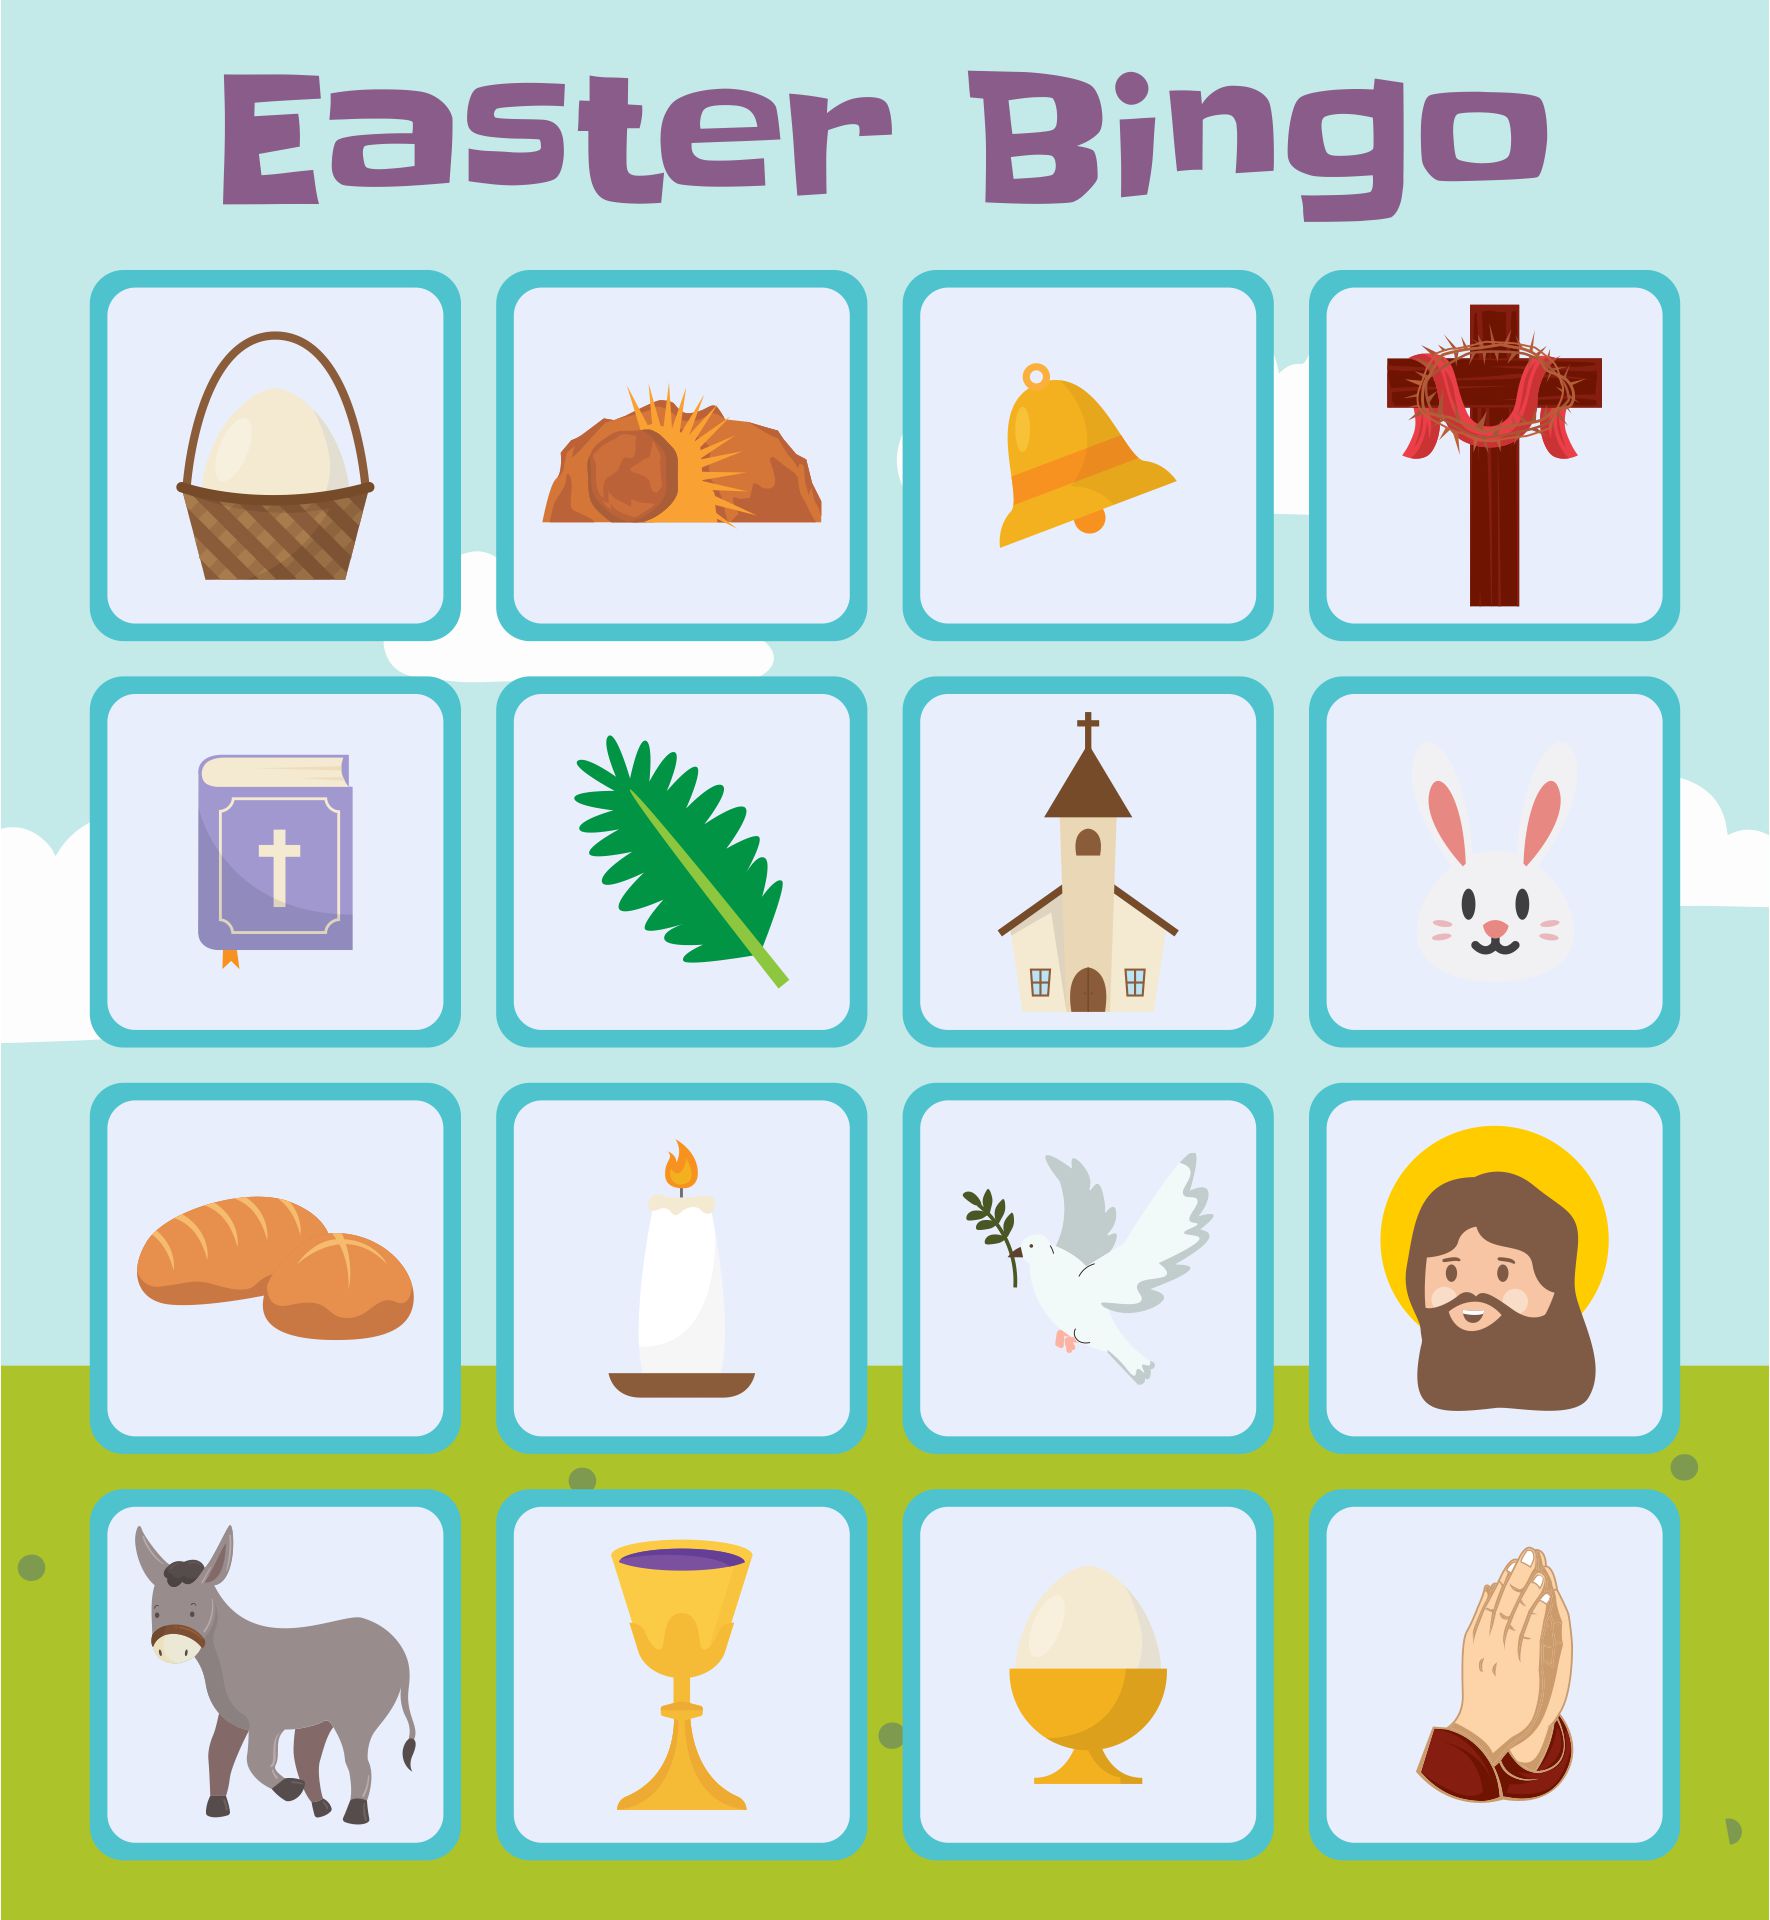 Printable Religious Easter Bingo Cards